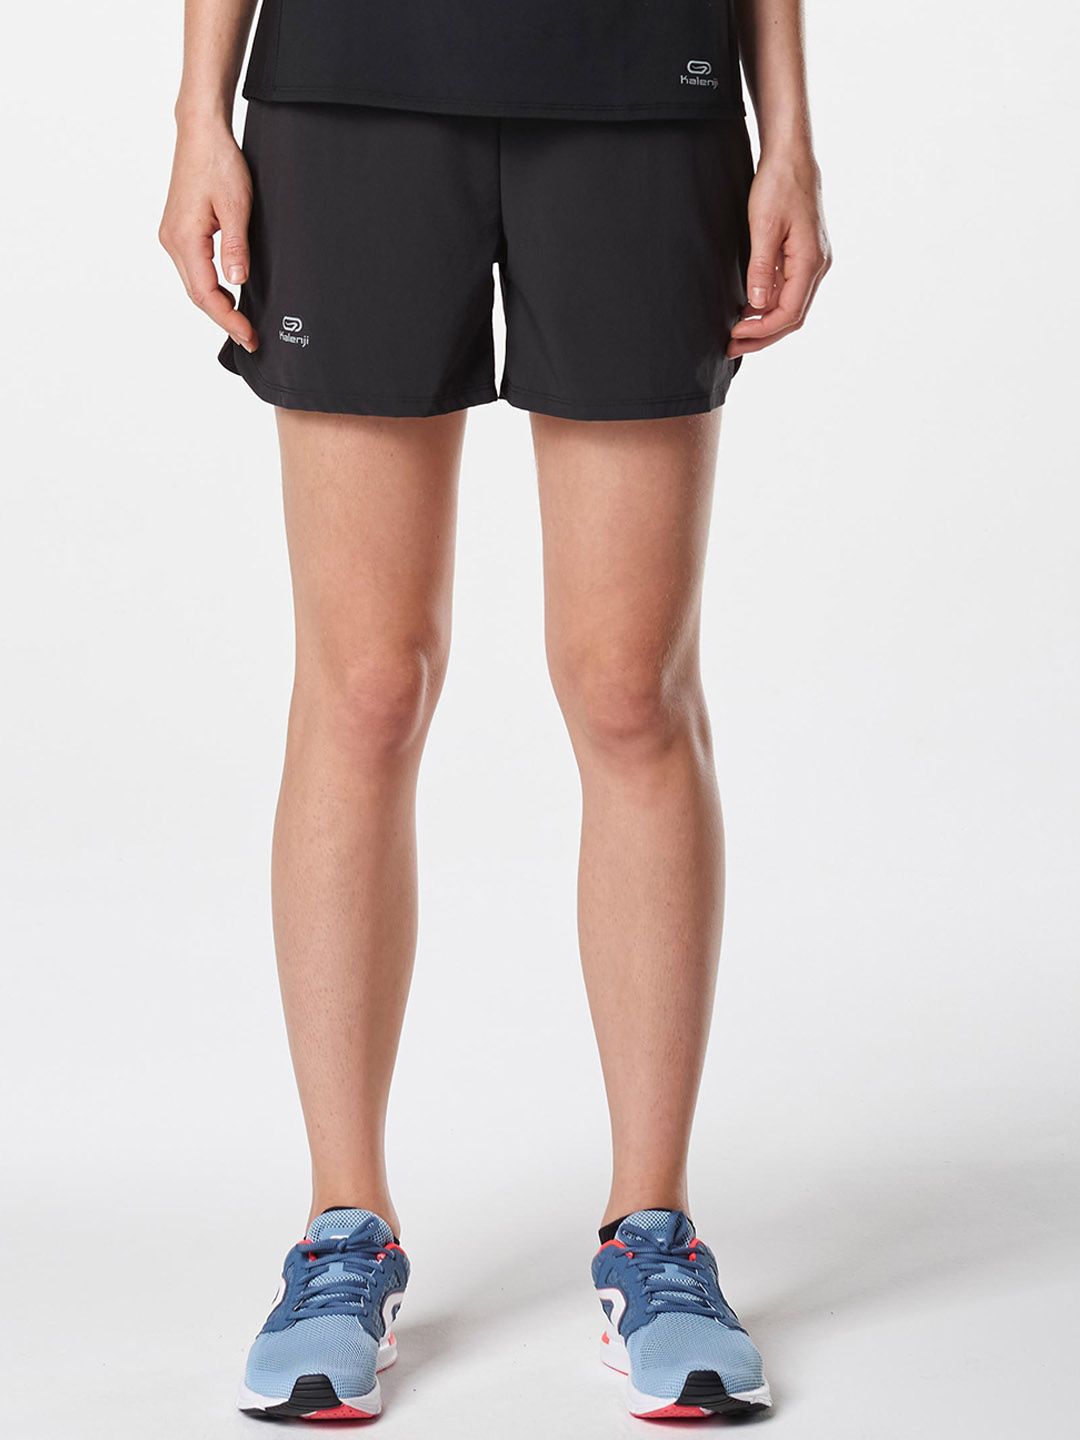 Kalenji By Decathlon Women Black Solid Regular Fit Running Shorts Price in India